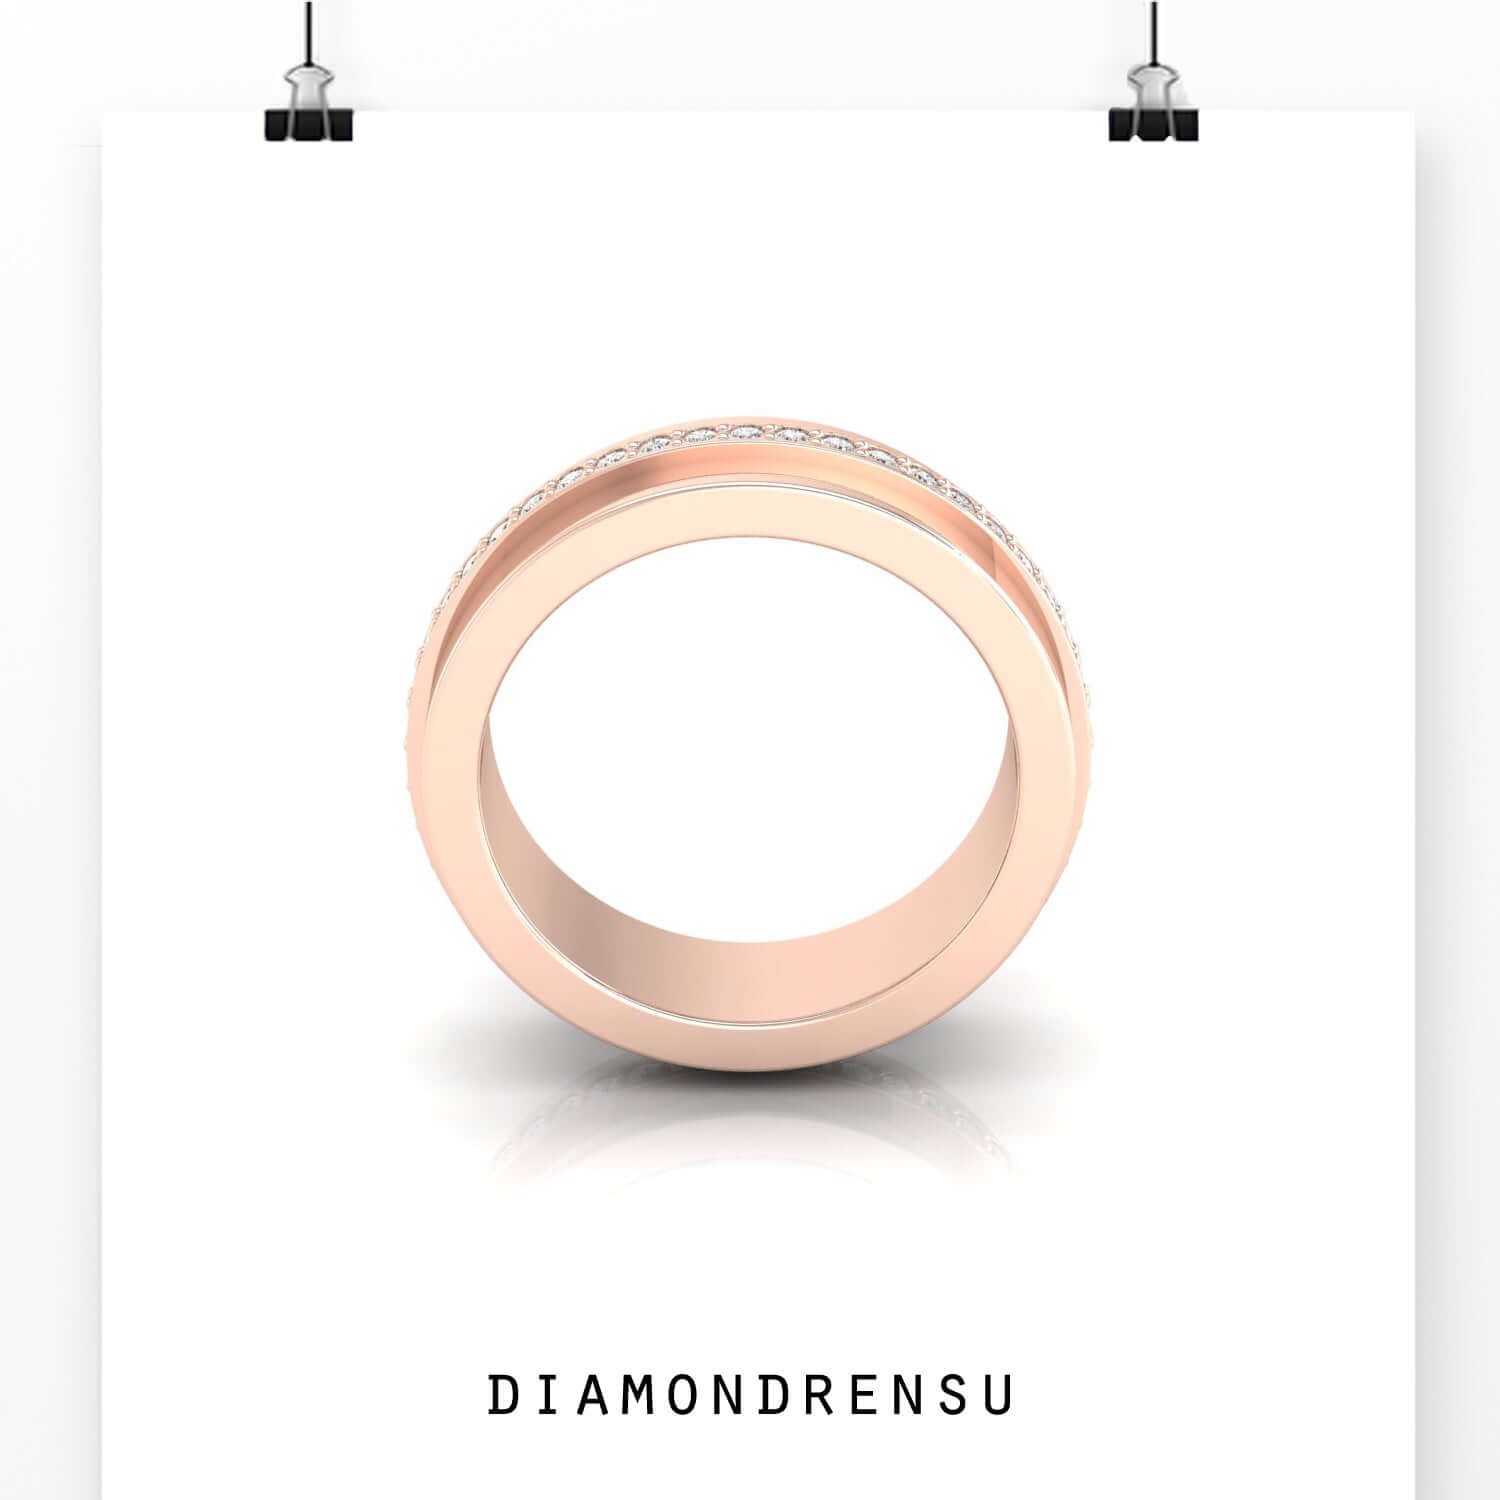 gift for him - diamondrensu